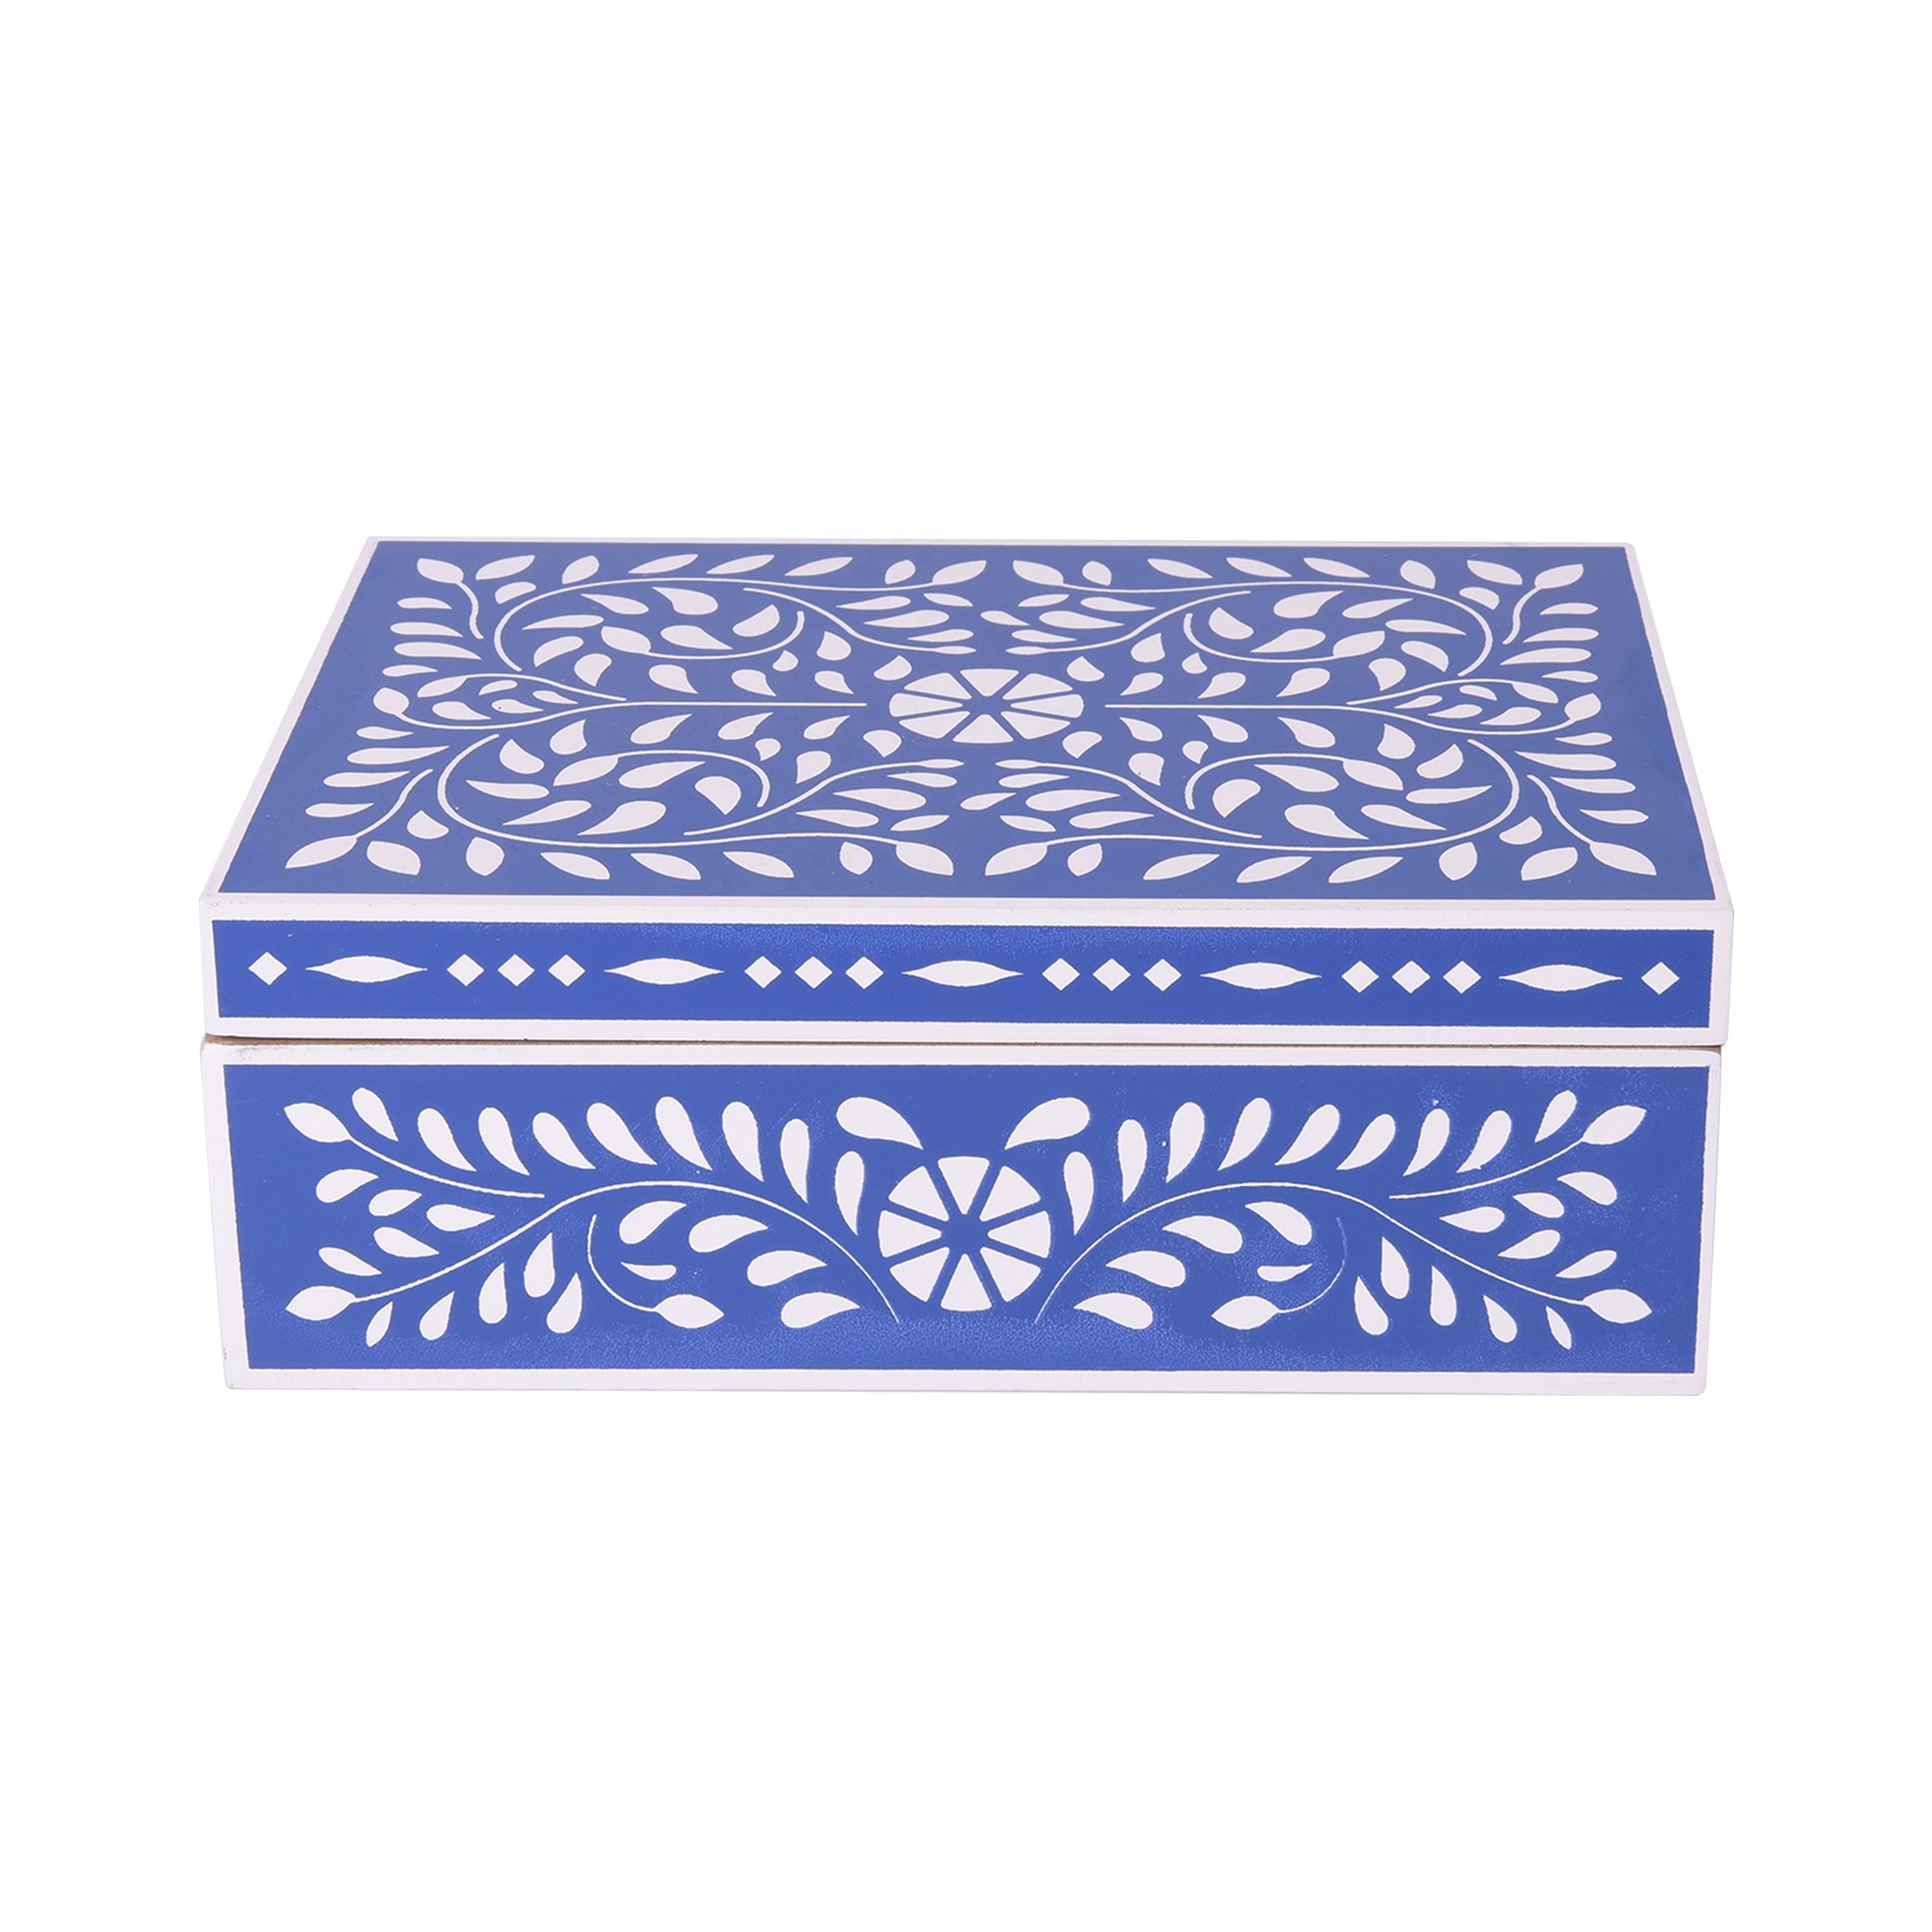 Wooden Simple Home Decoration Storage Box Blue Pattern Box